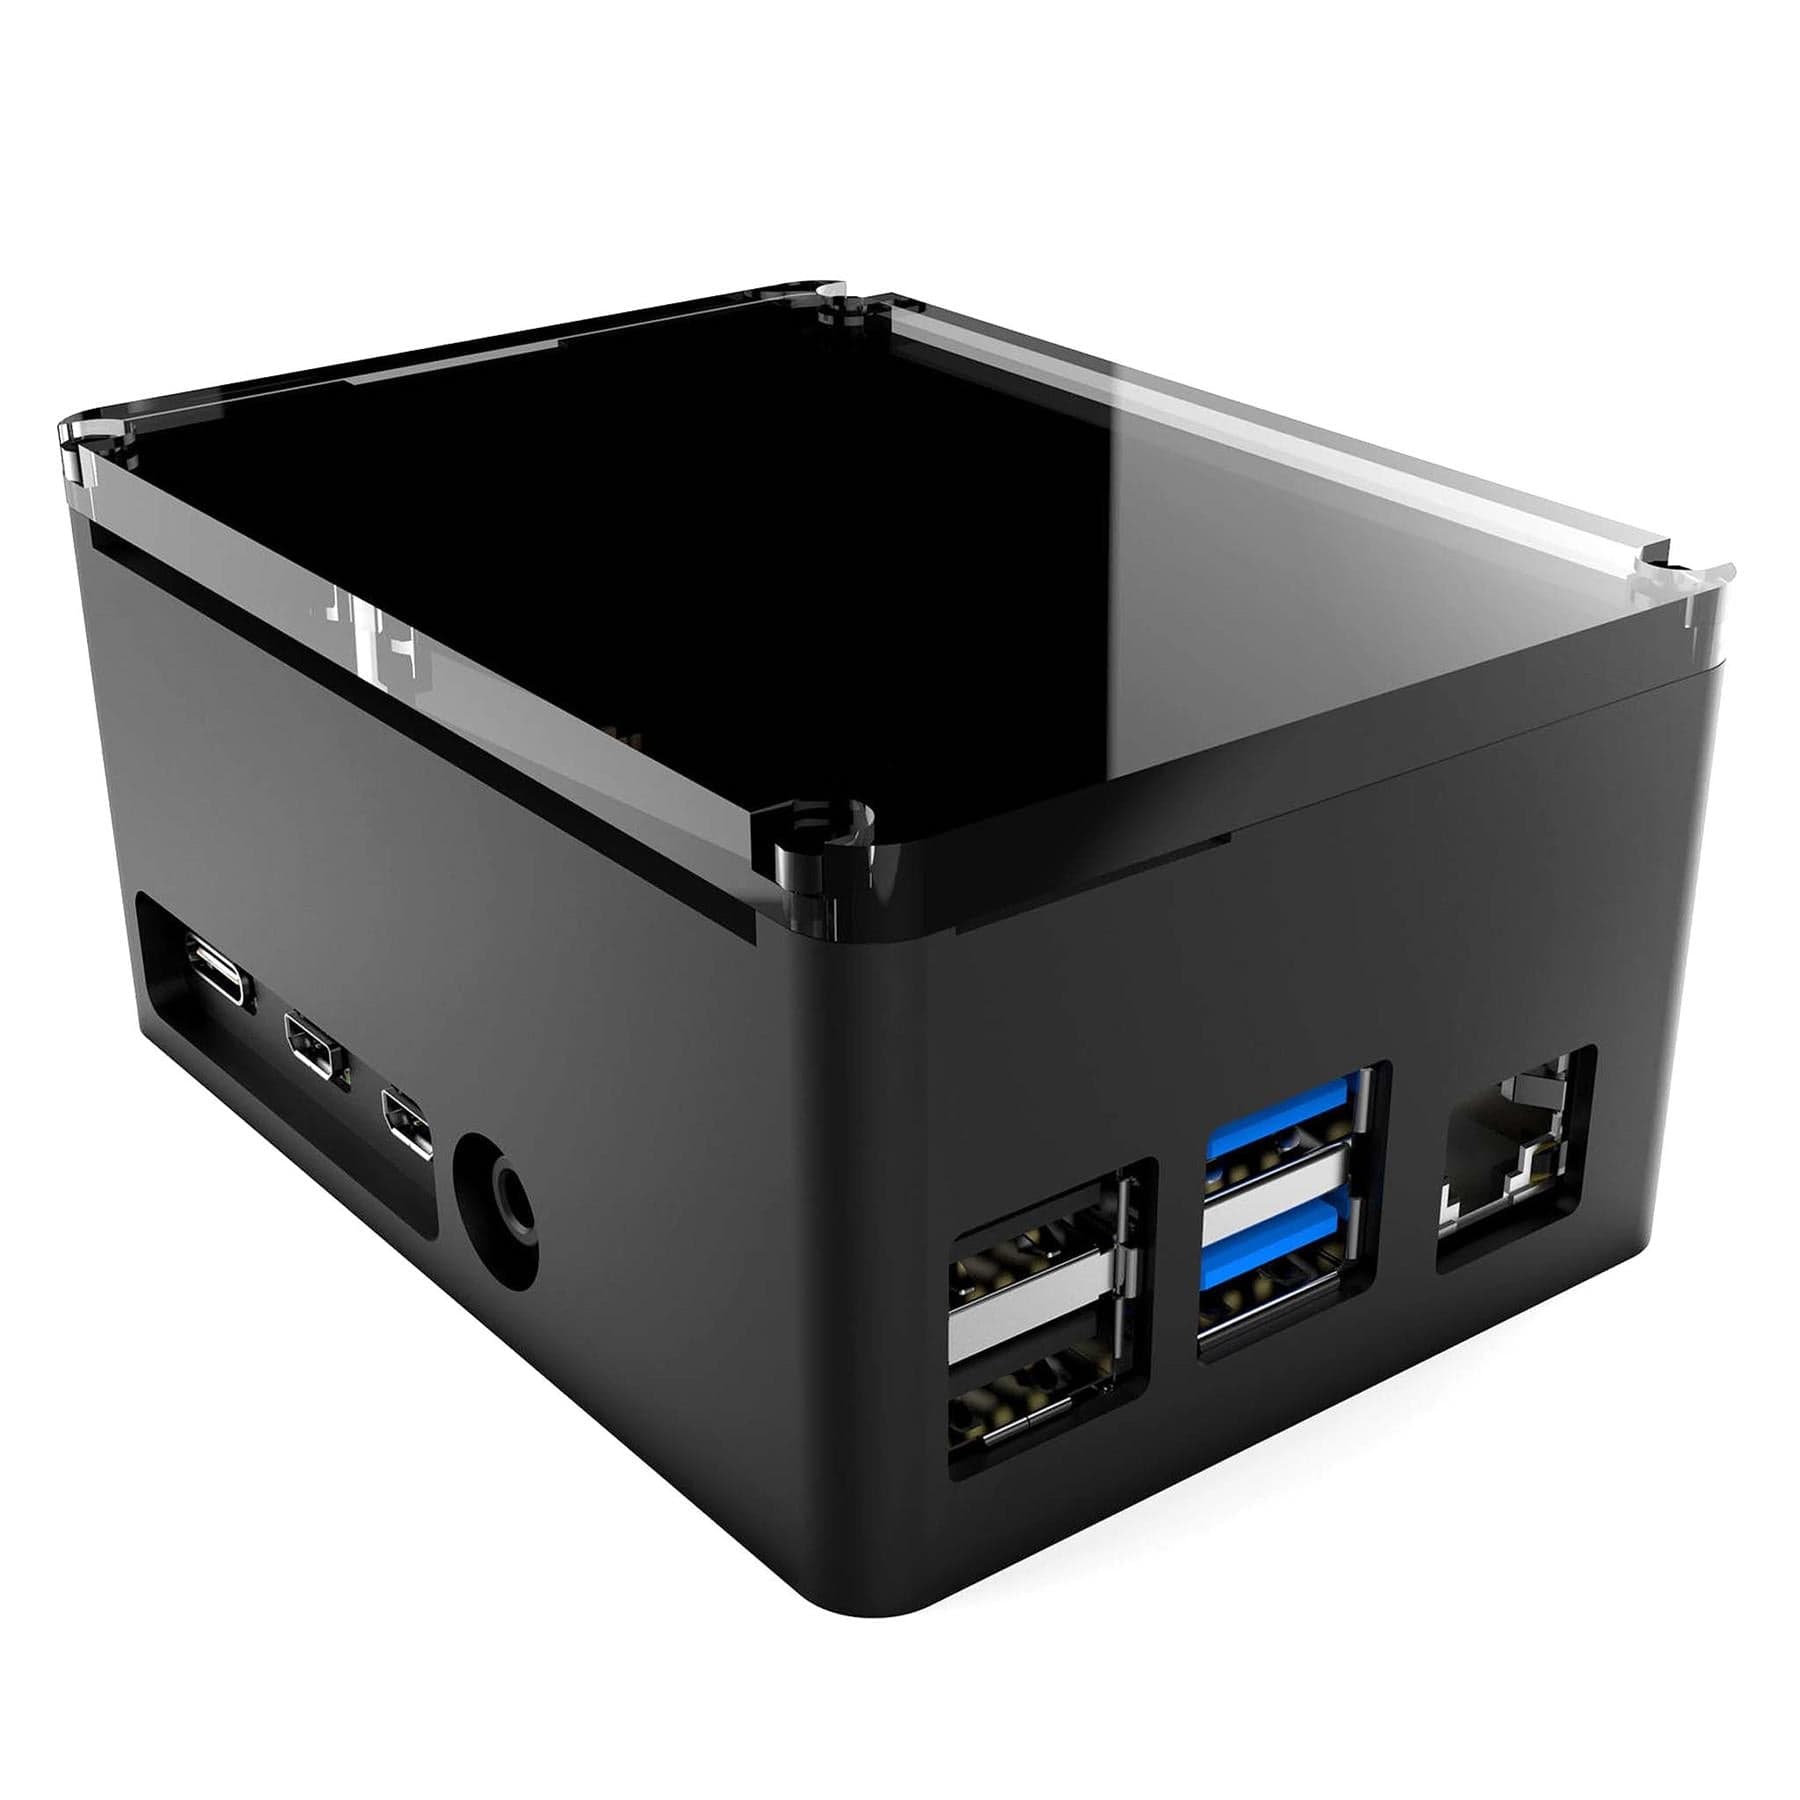 Anidees PRO Extra Tall Raspberry Pi 4 Case - Black - The Pi Hut